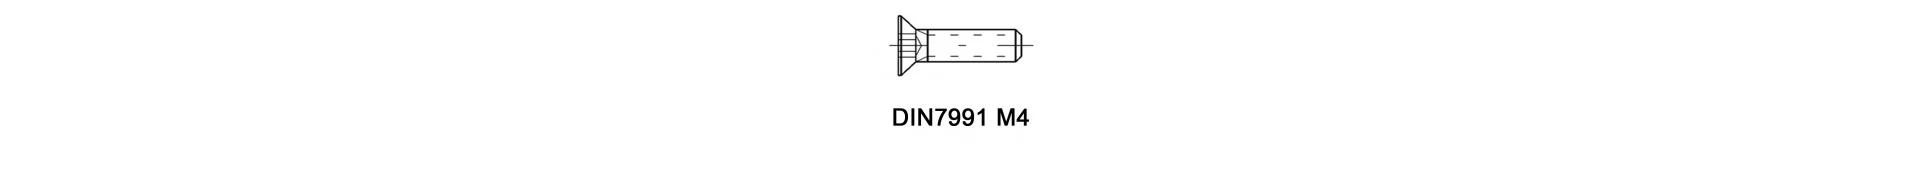 DIN7991 M4